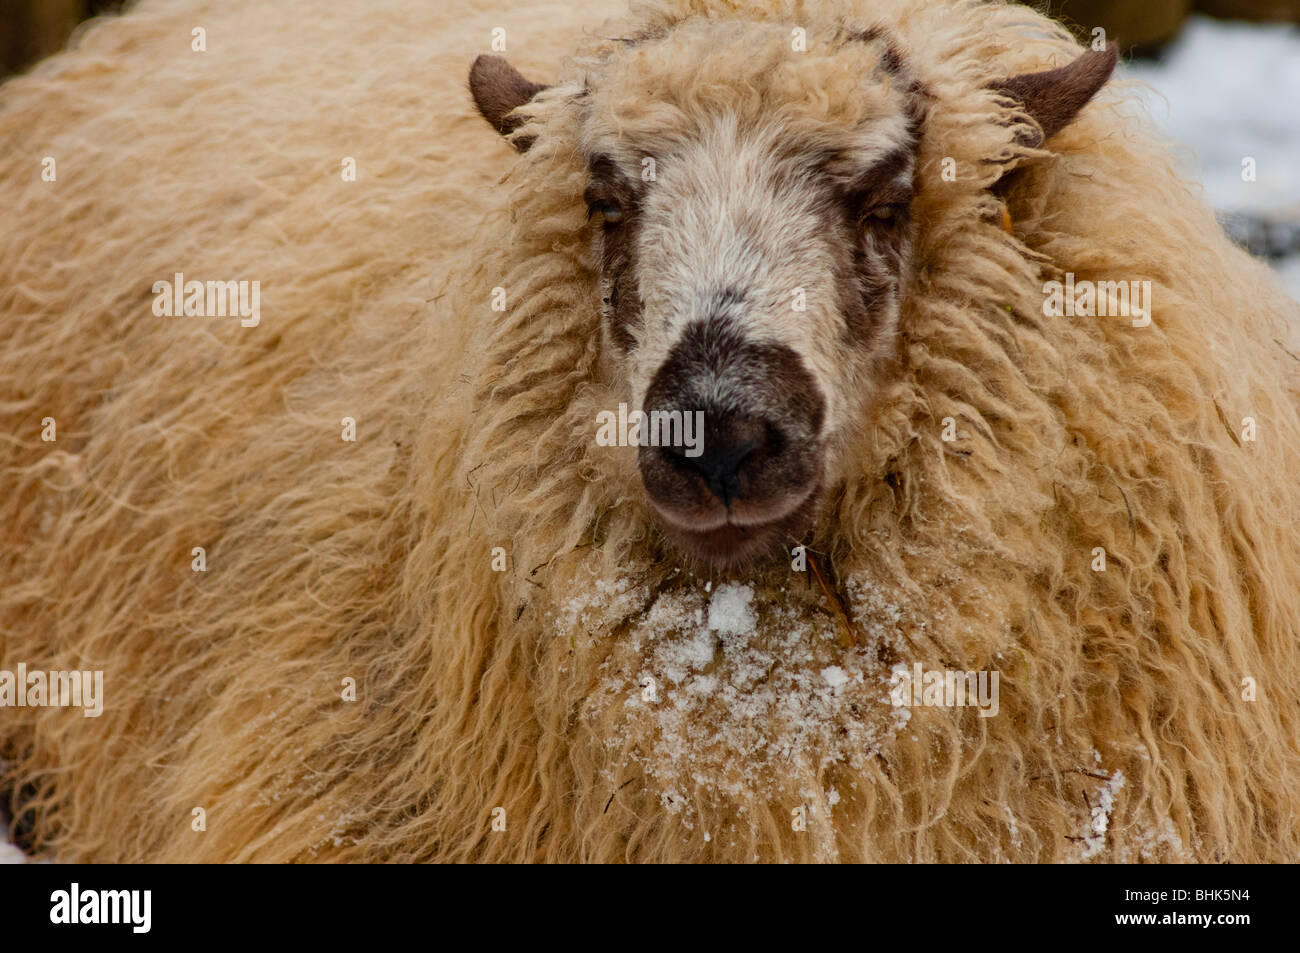 Big woolly sheep Stock Photo